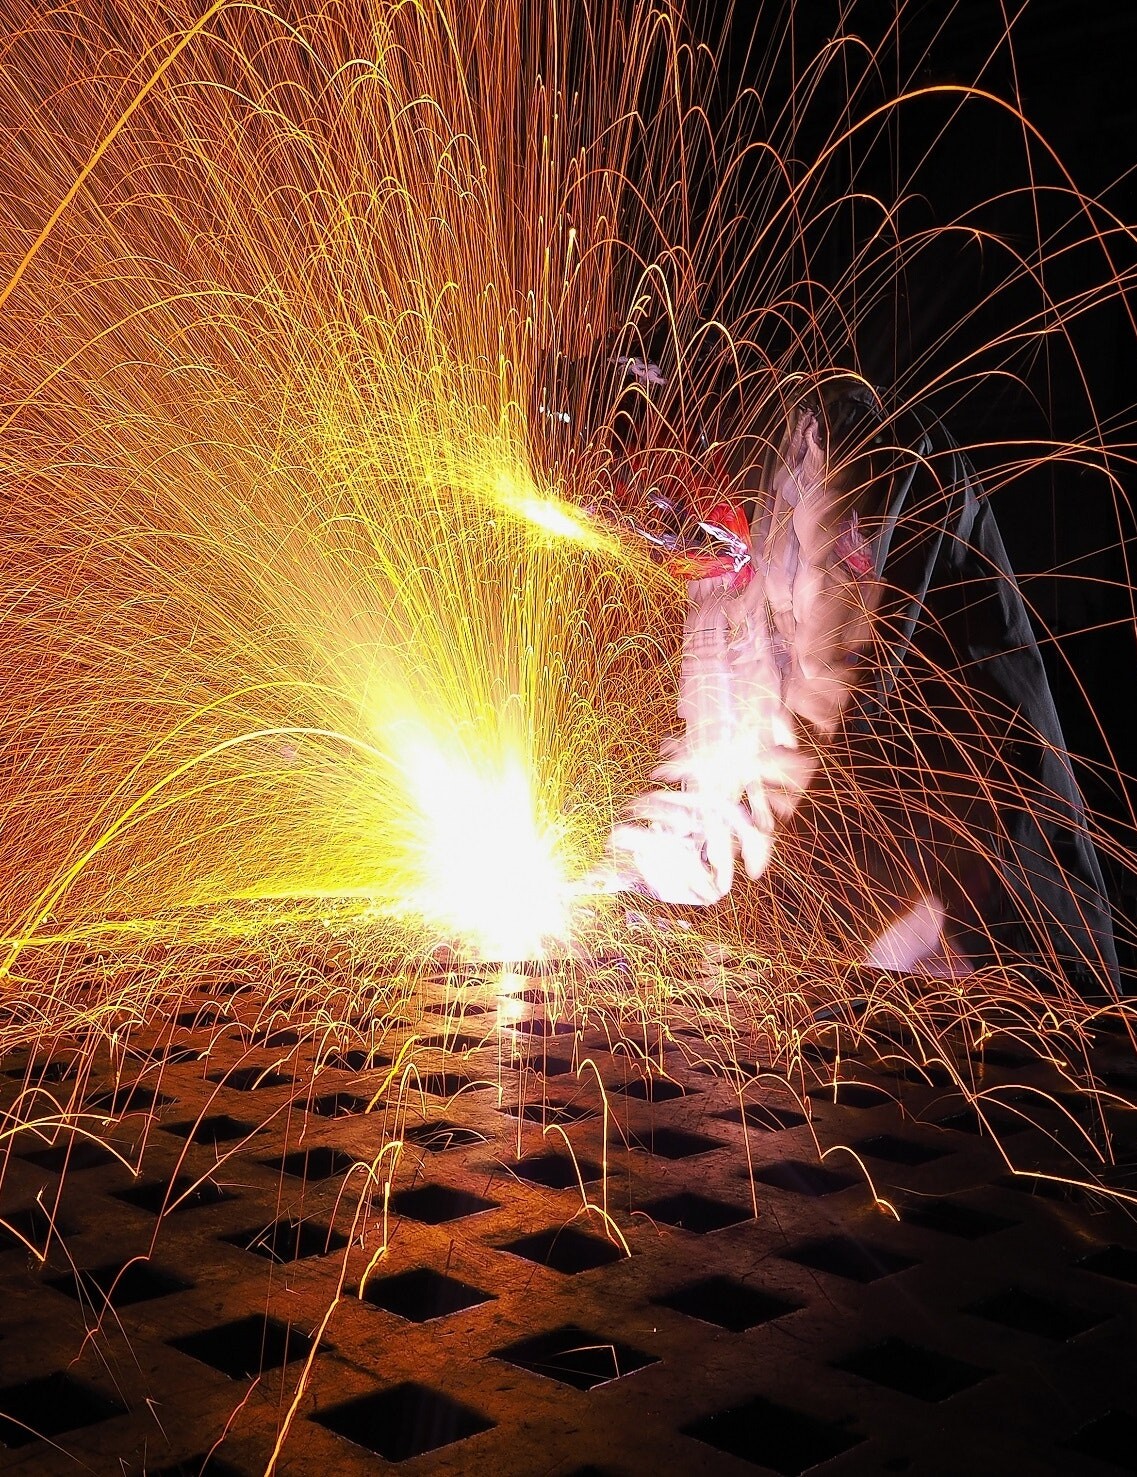 sparks flying from welding